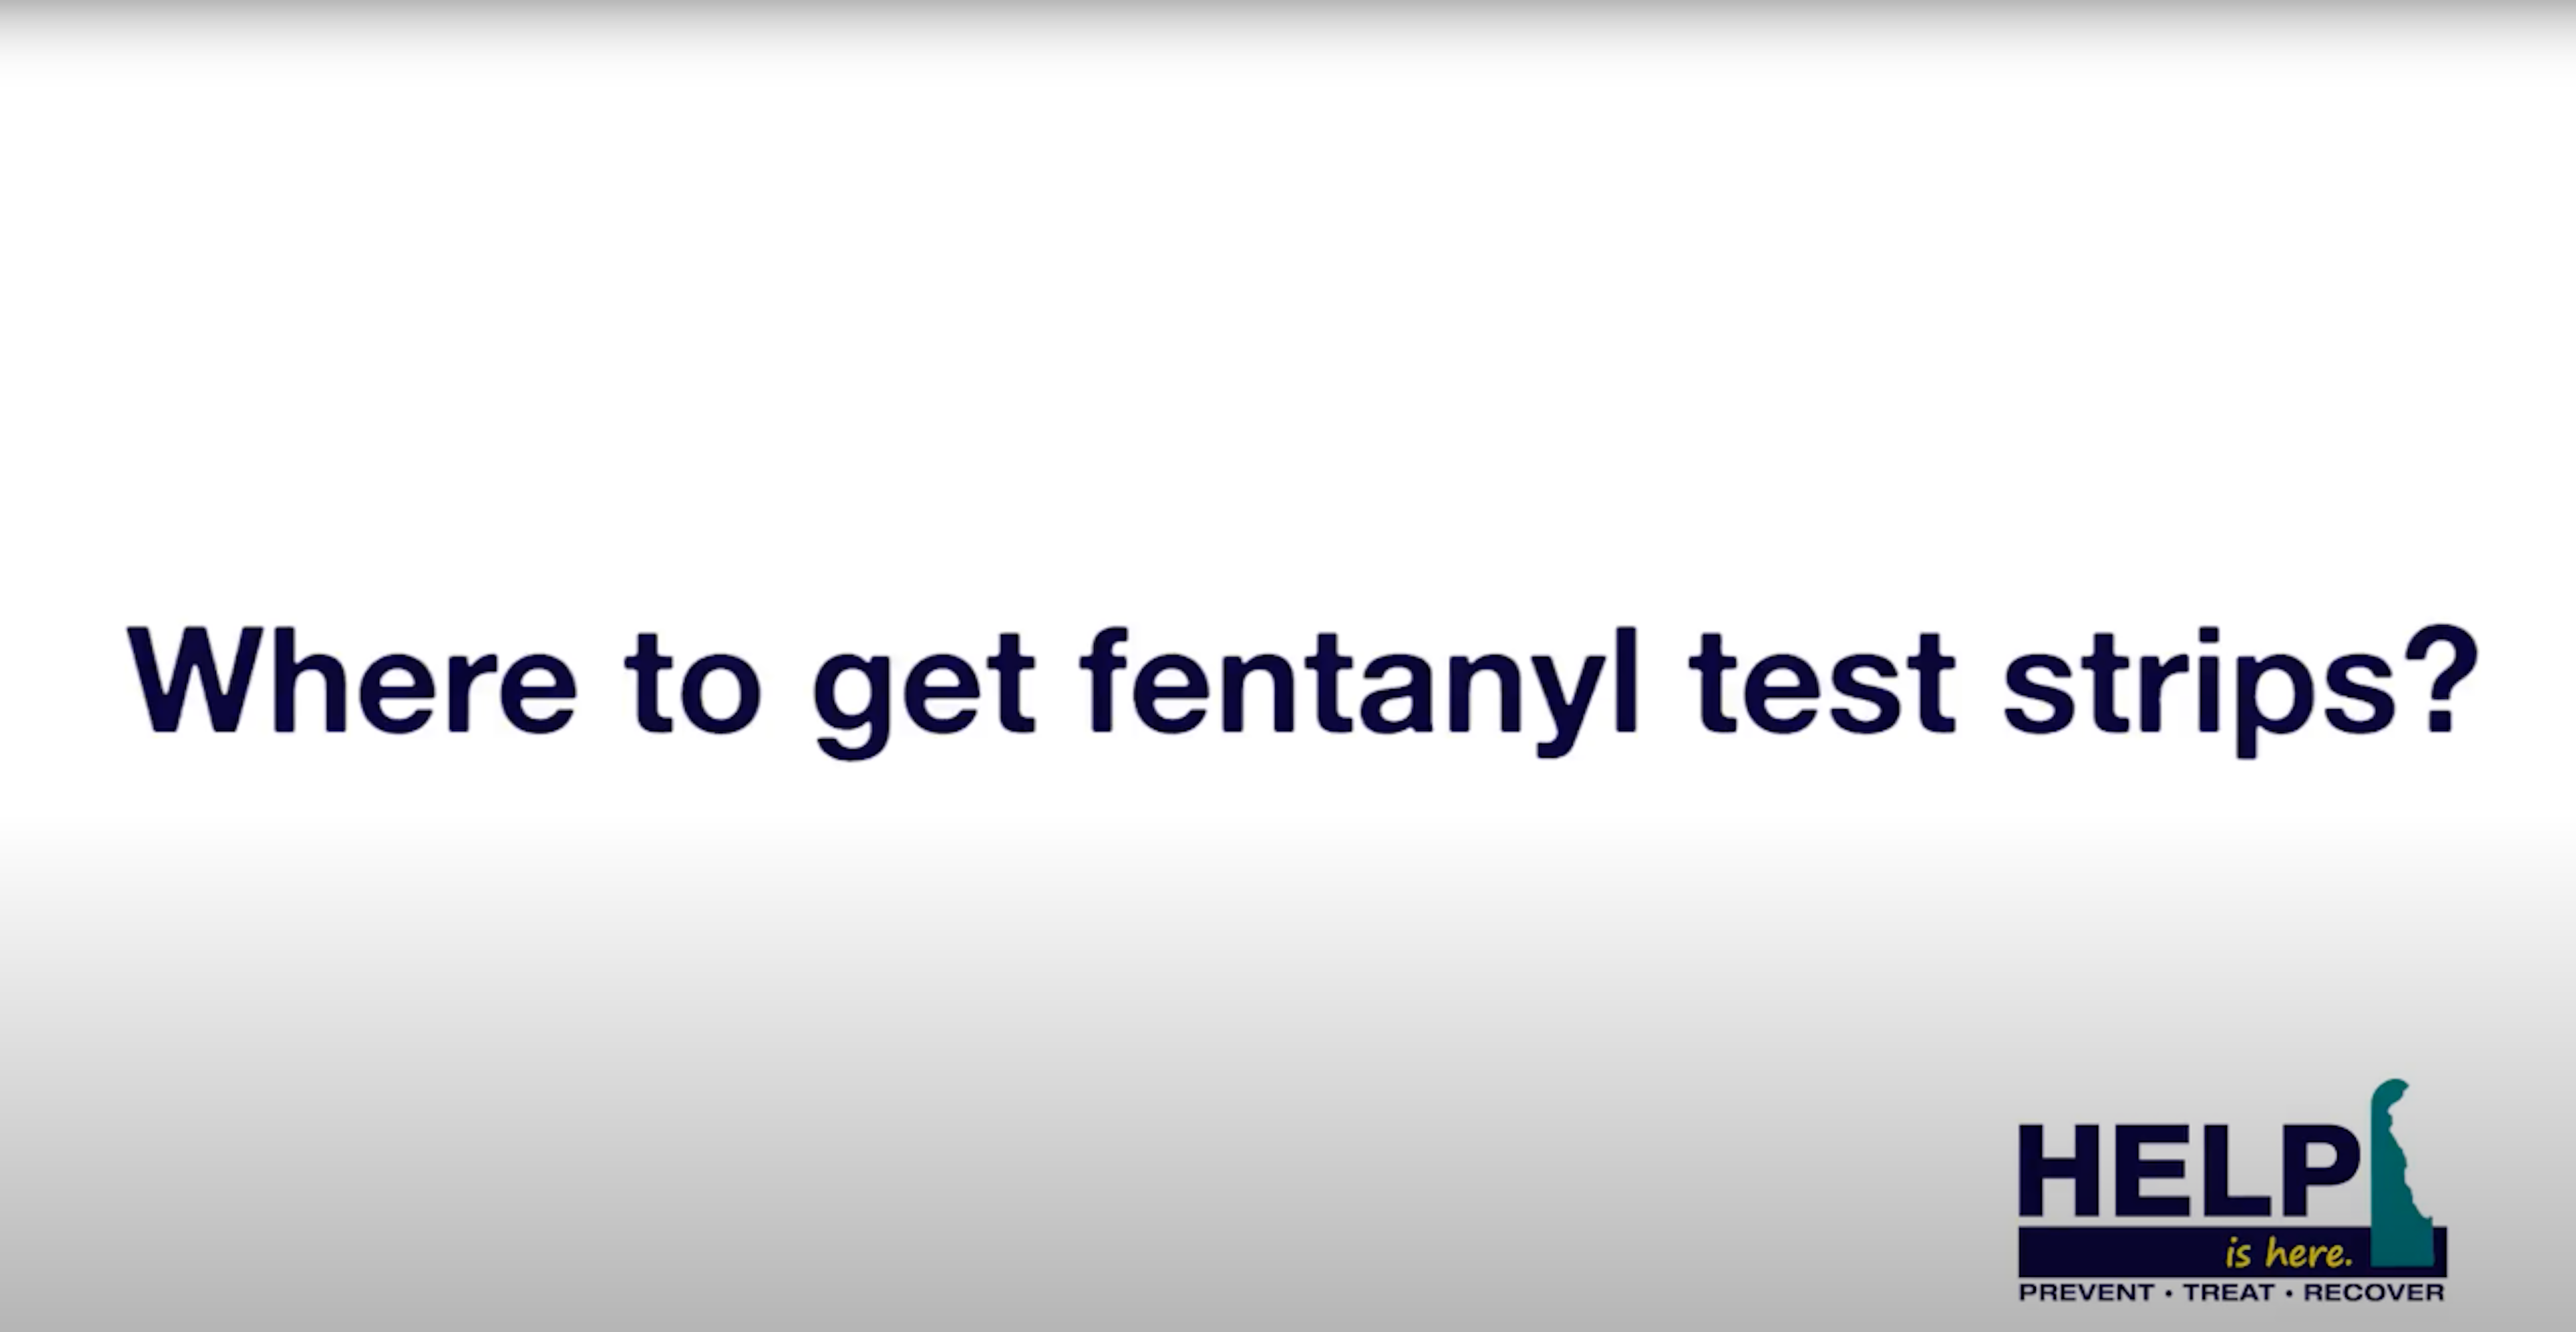 Where do I get fentanyl test strips?